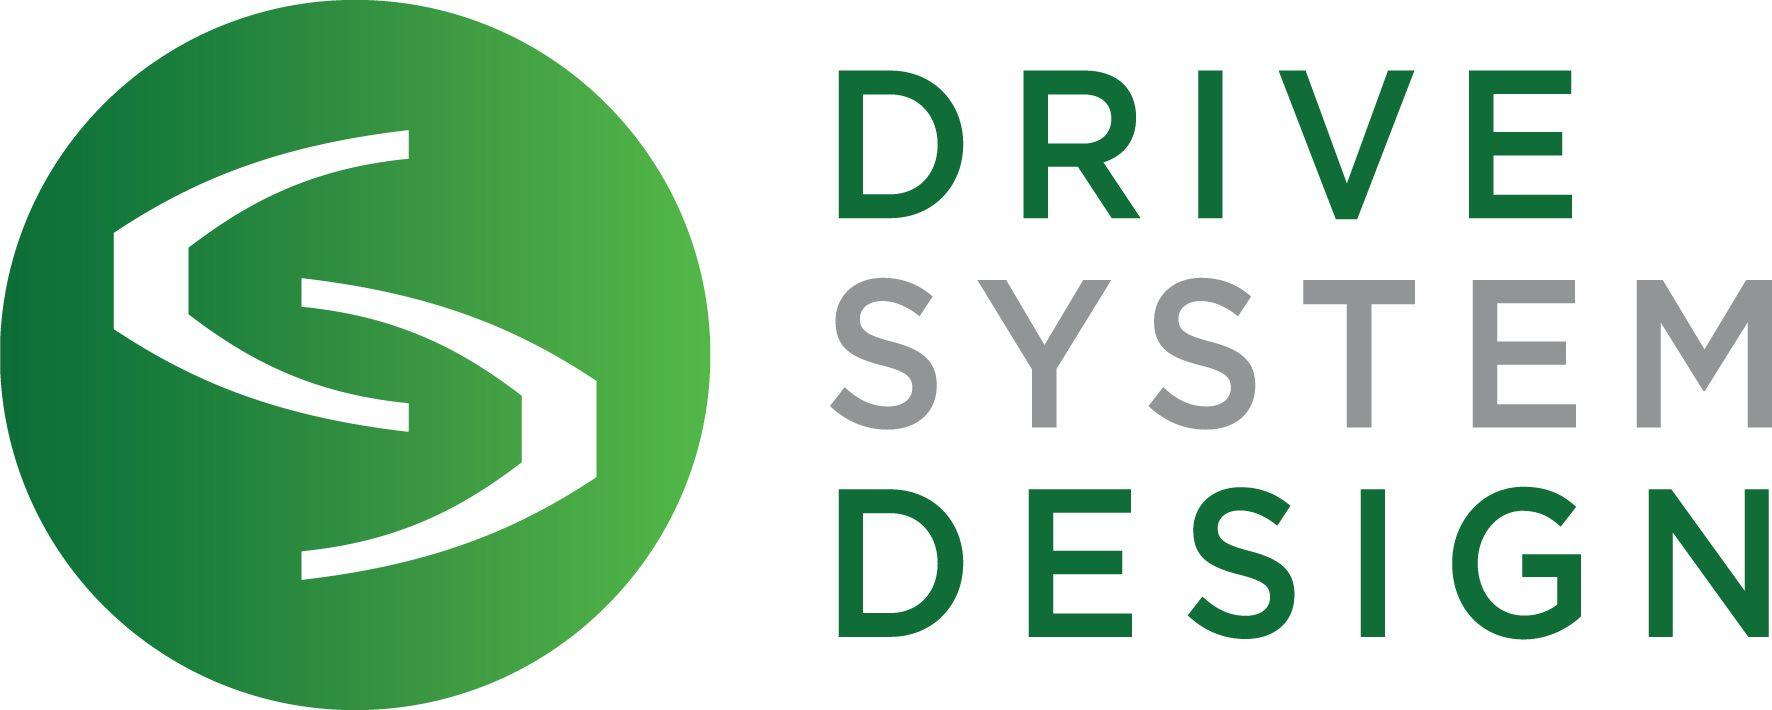 DSD Logo - DSD logo (2) - Market Engineering Ltd.